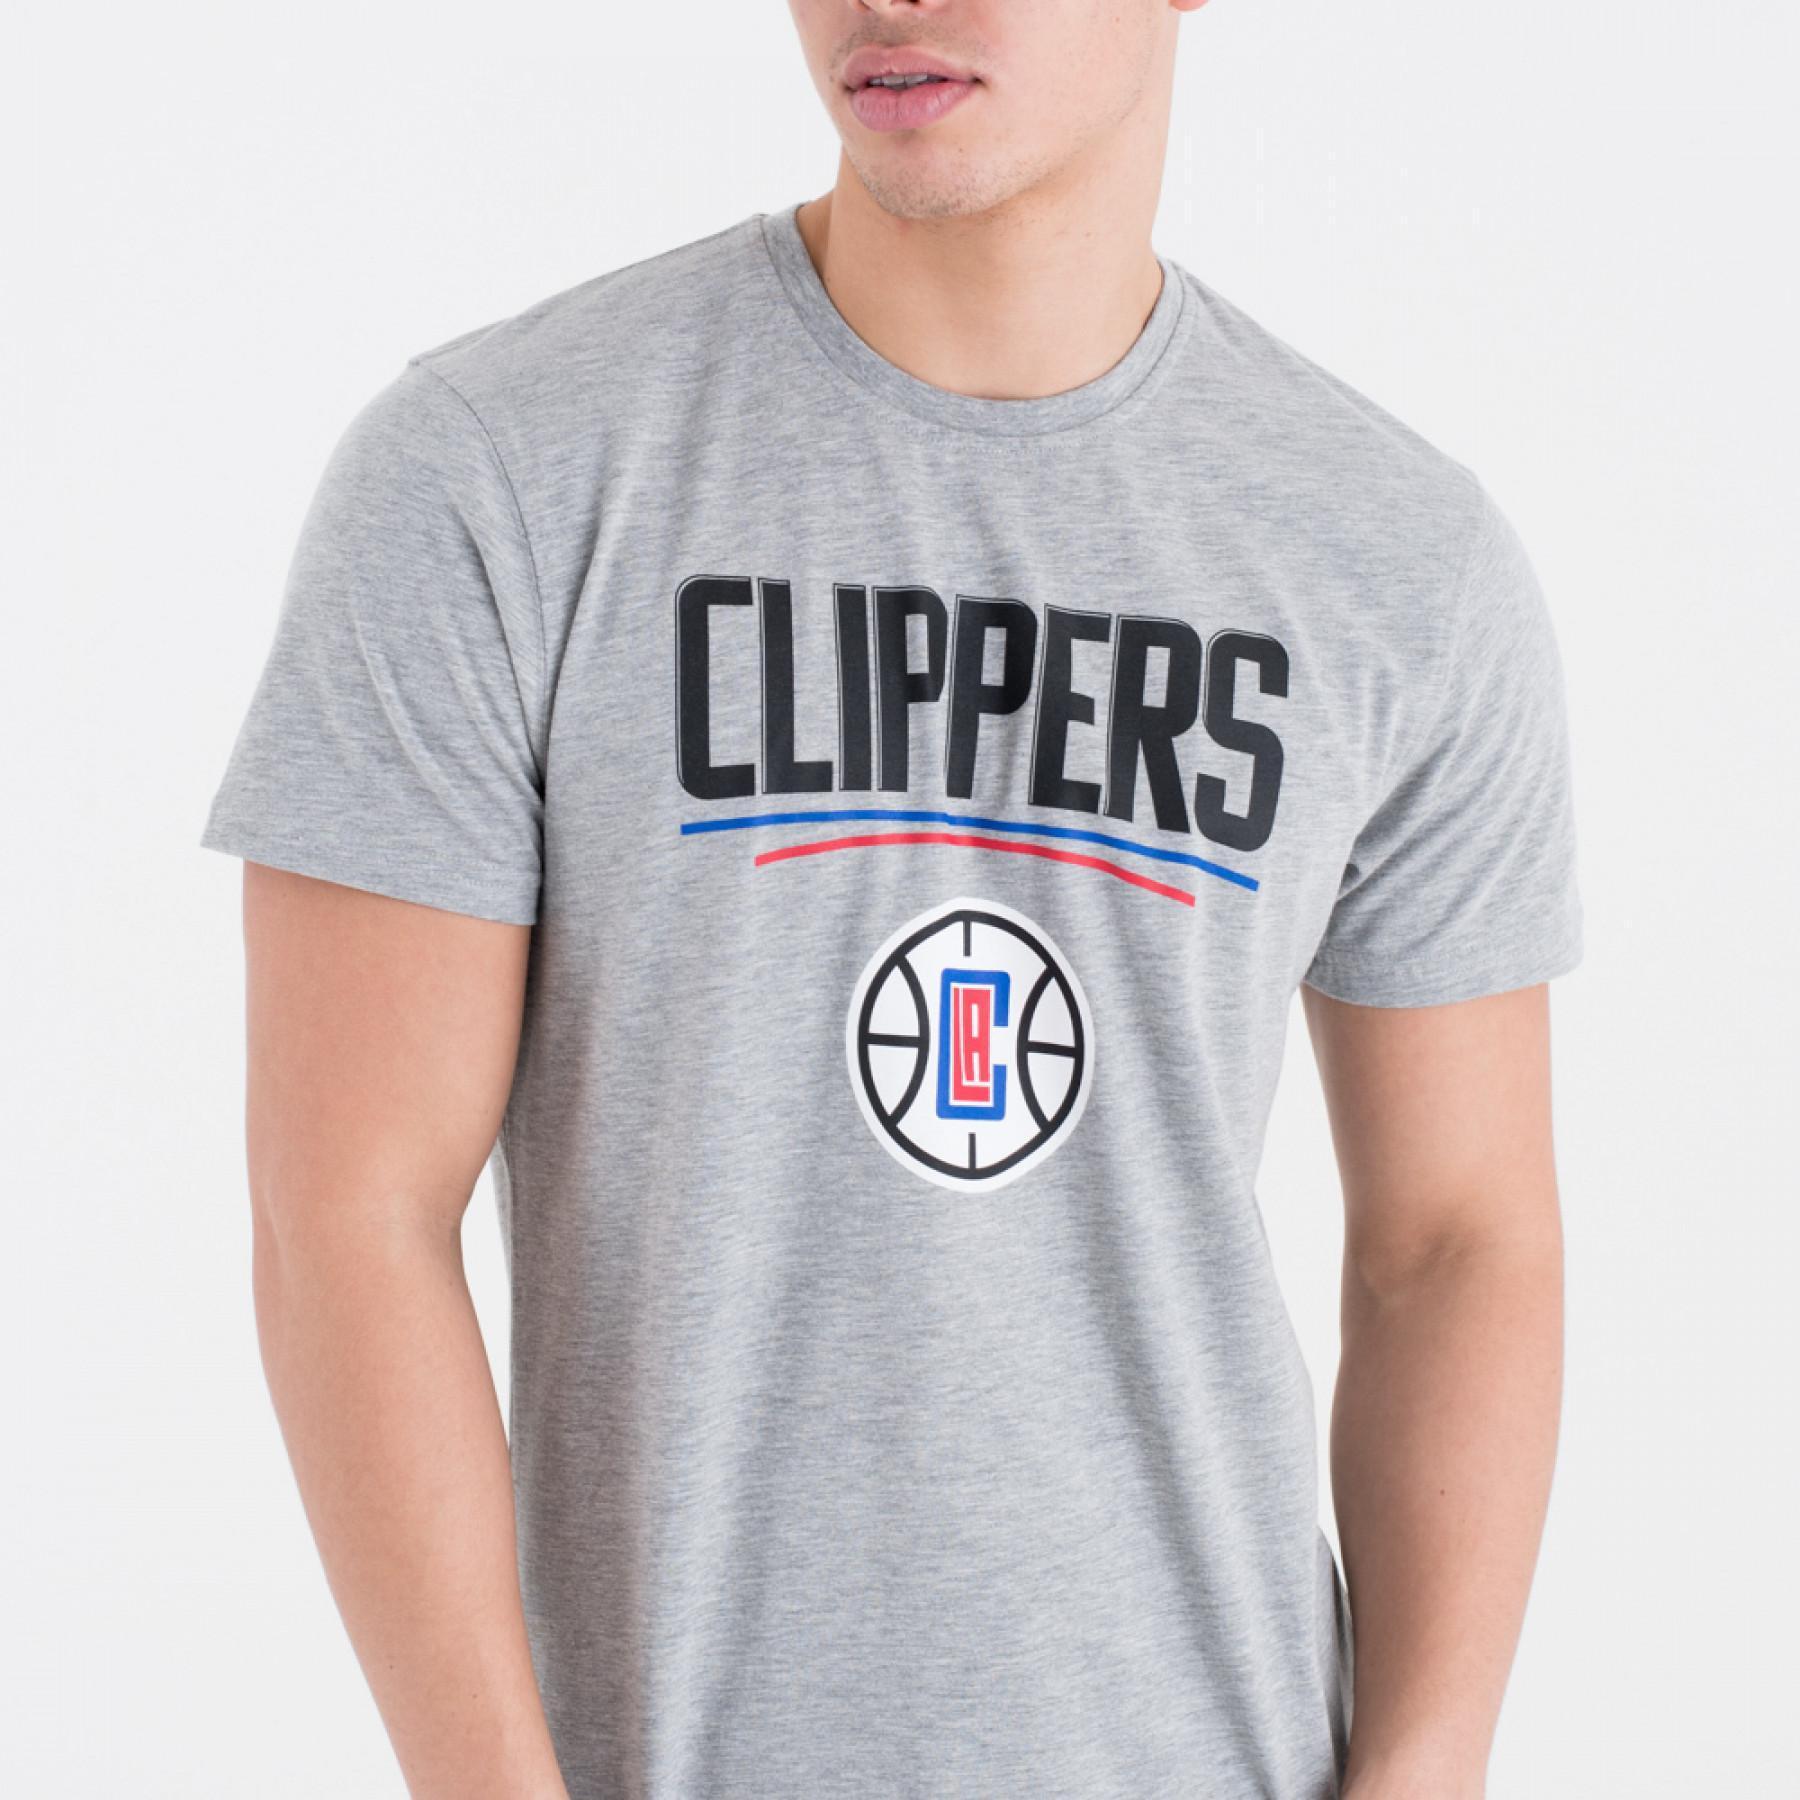  New EraT - s h i r t   logo Los Angeles Clippers